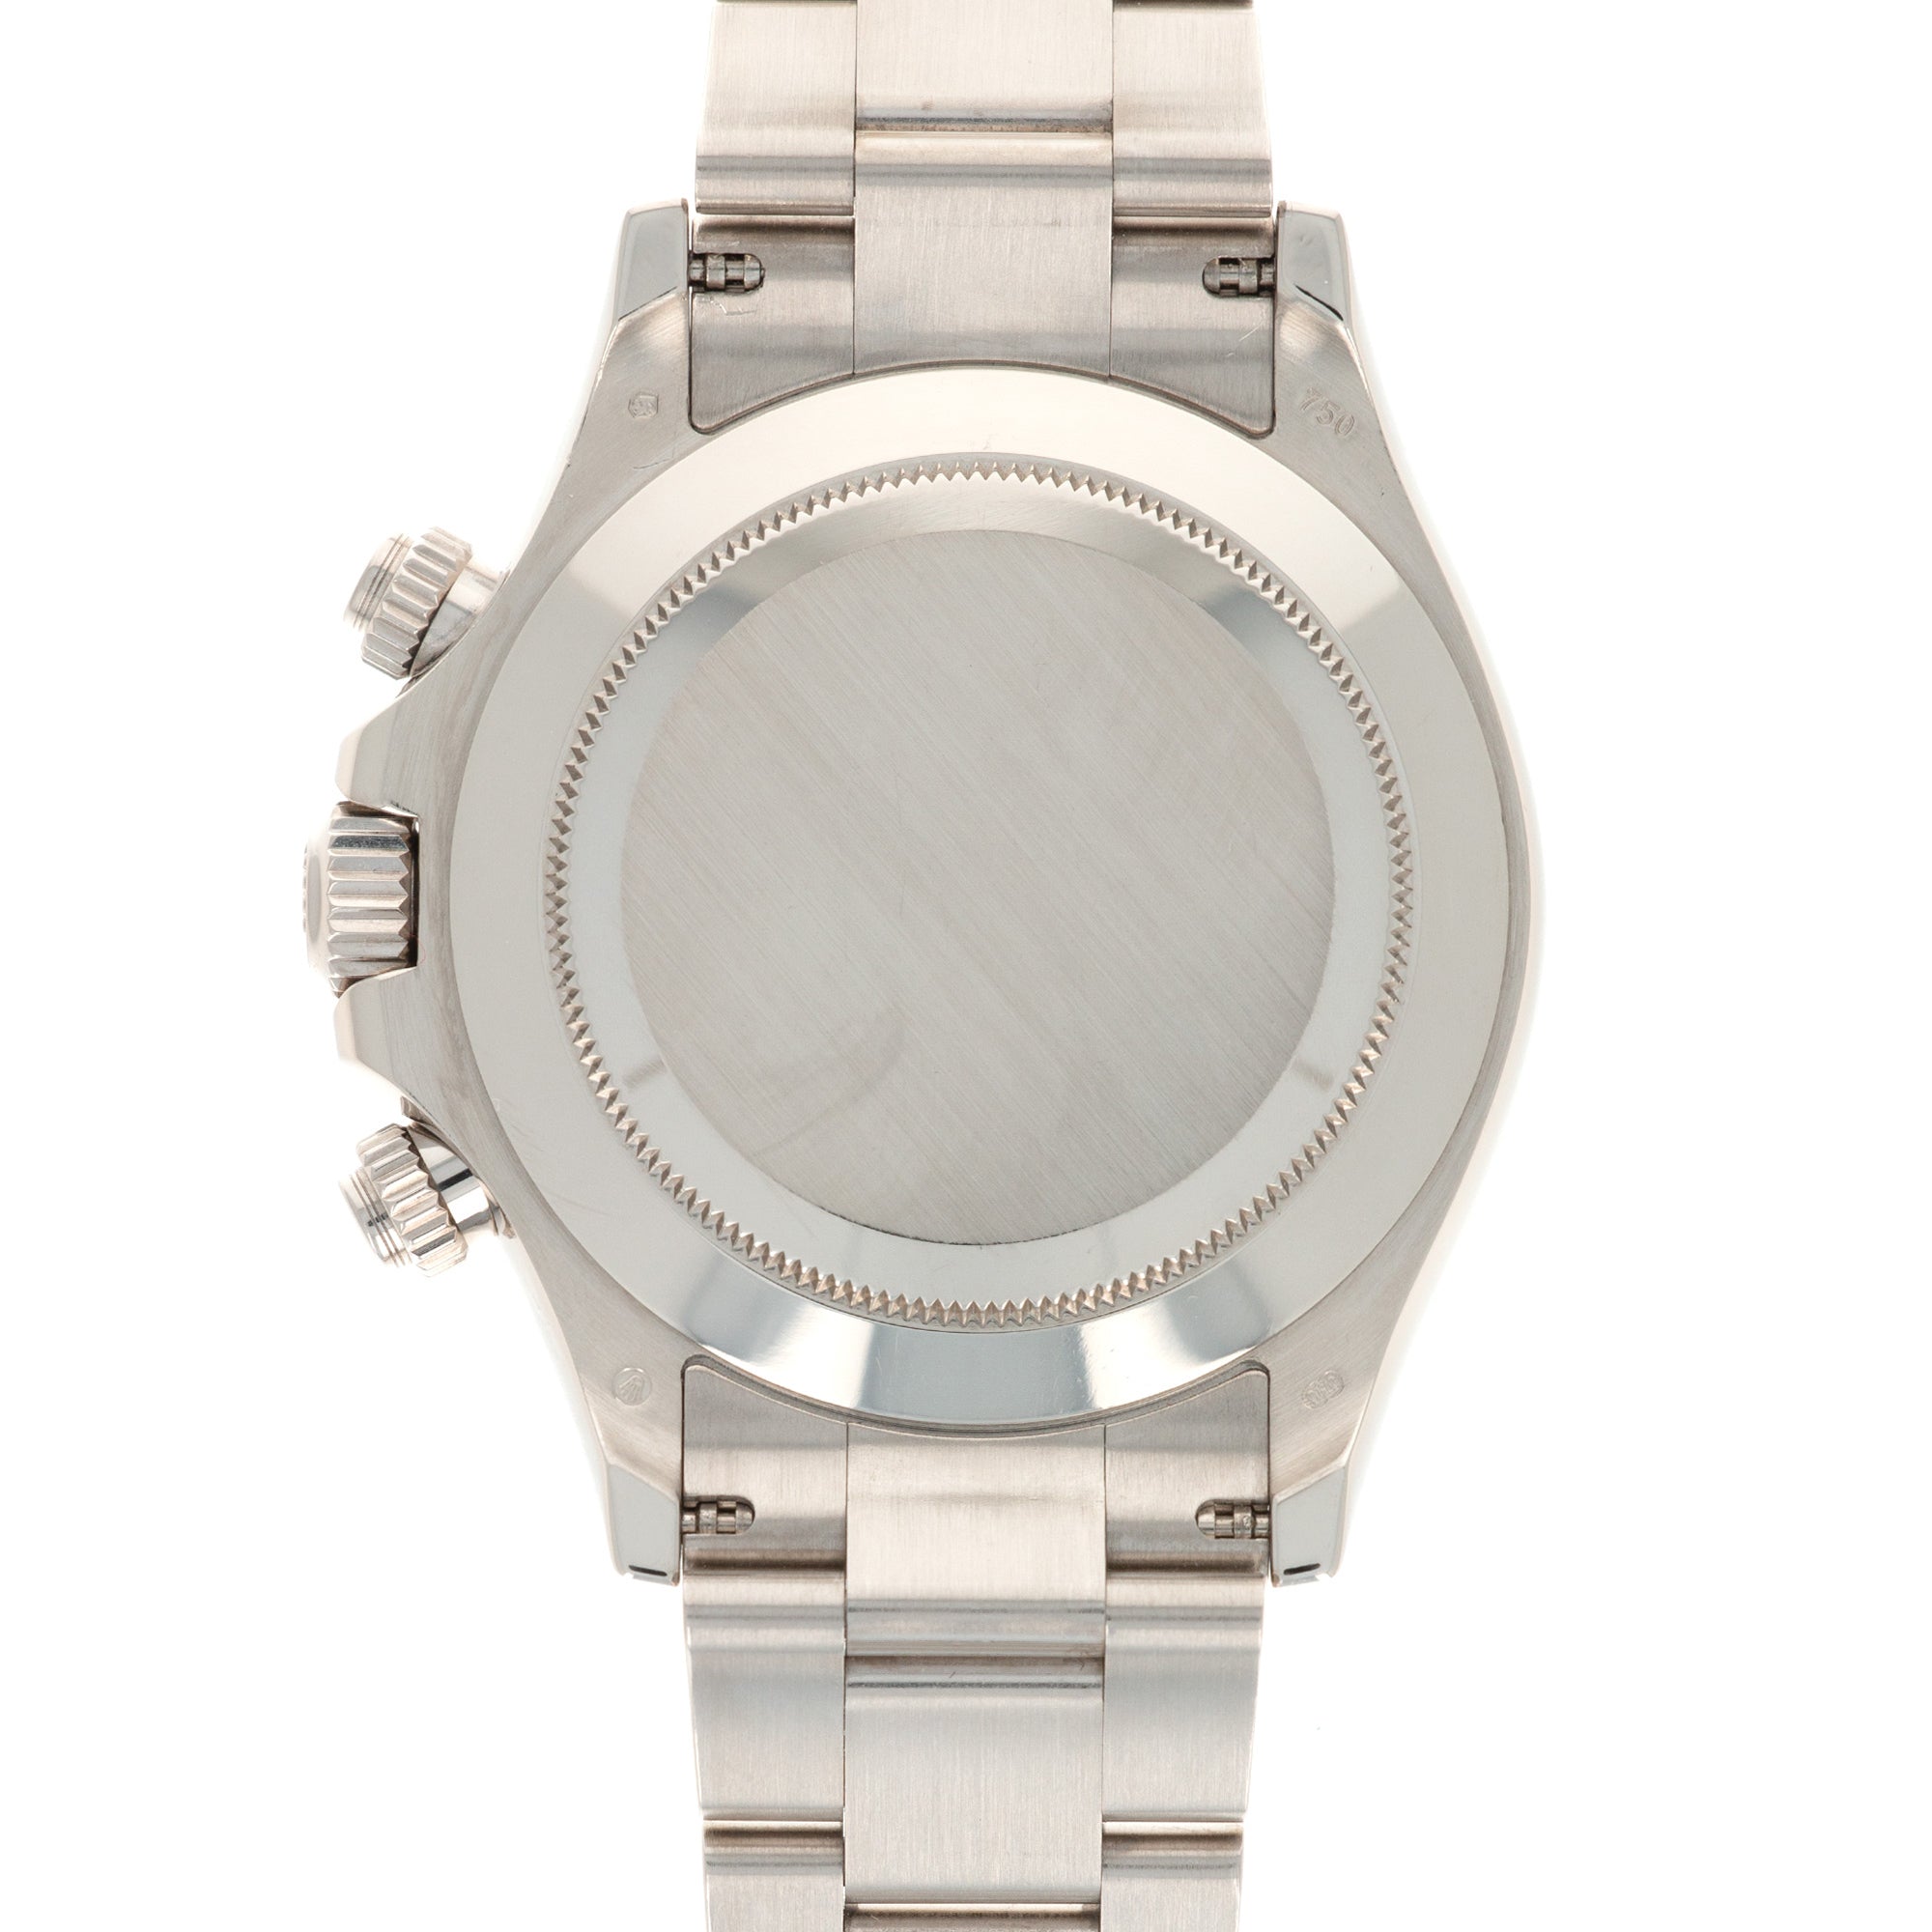 Rolex - Rolex Daytona white Gold with diamond dial ref. 116509 - The Keystone Watches